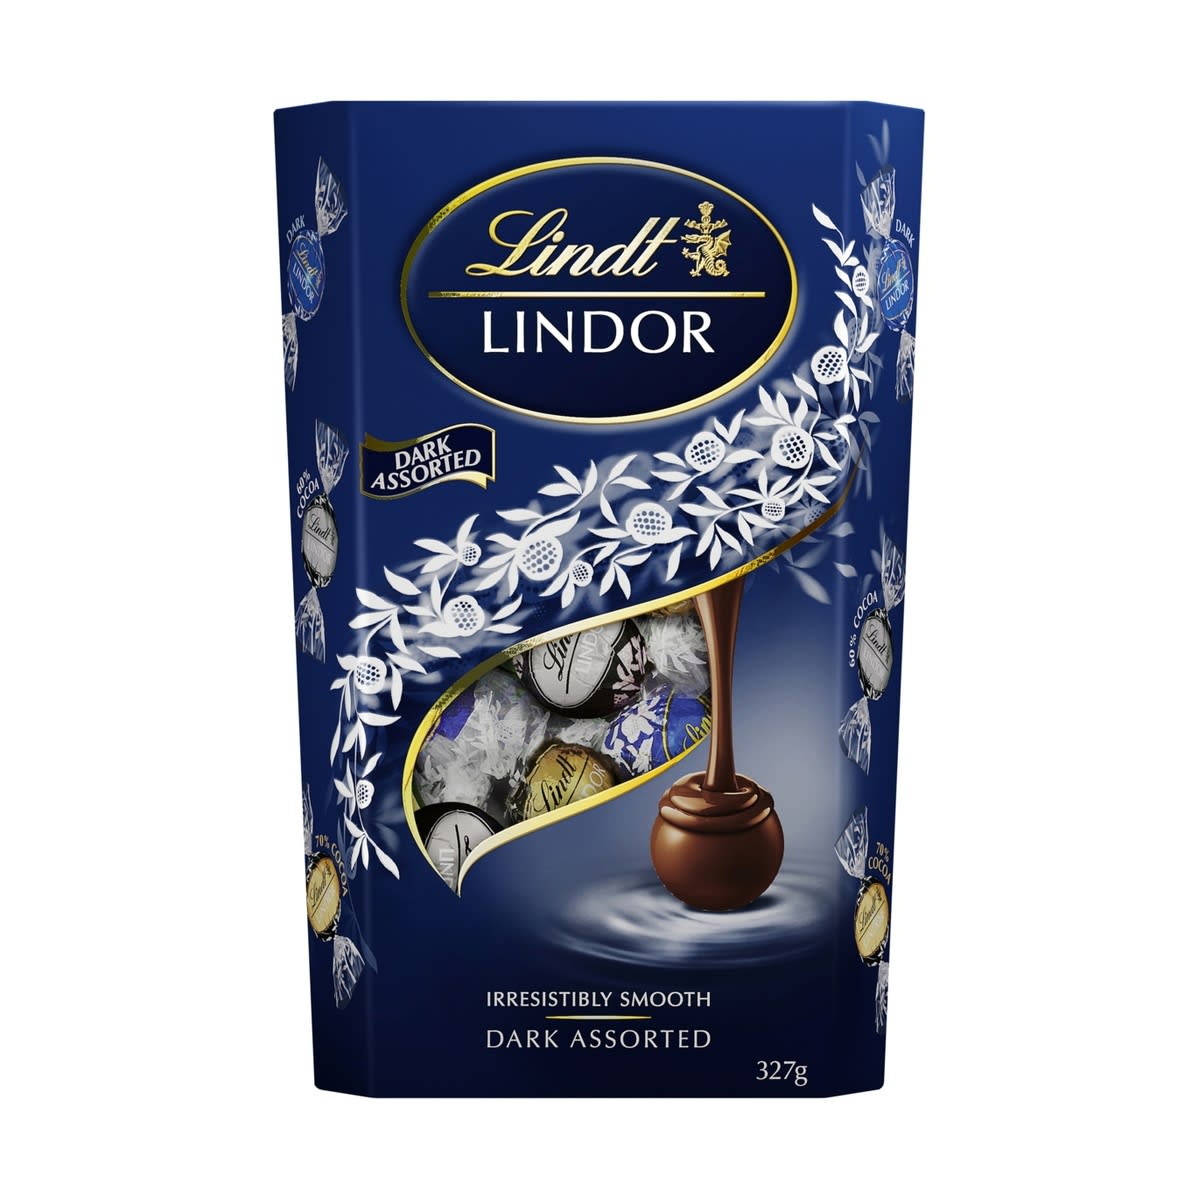 Lindt Lindor Dark Assorted Chocolate Cornet 327g Kmart 7001